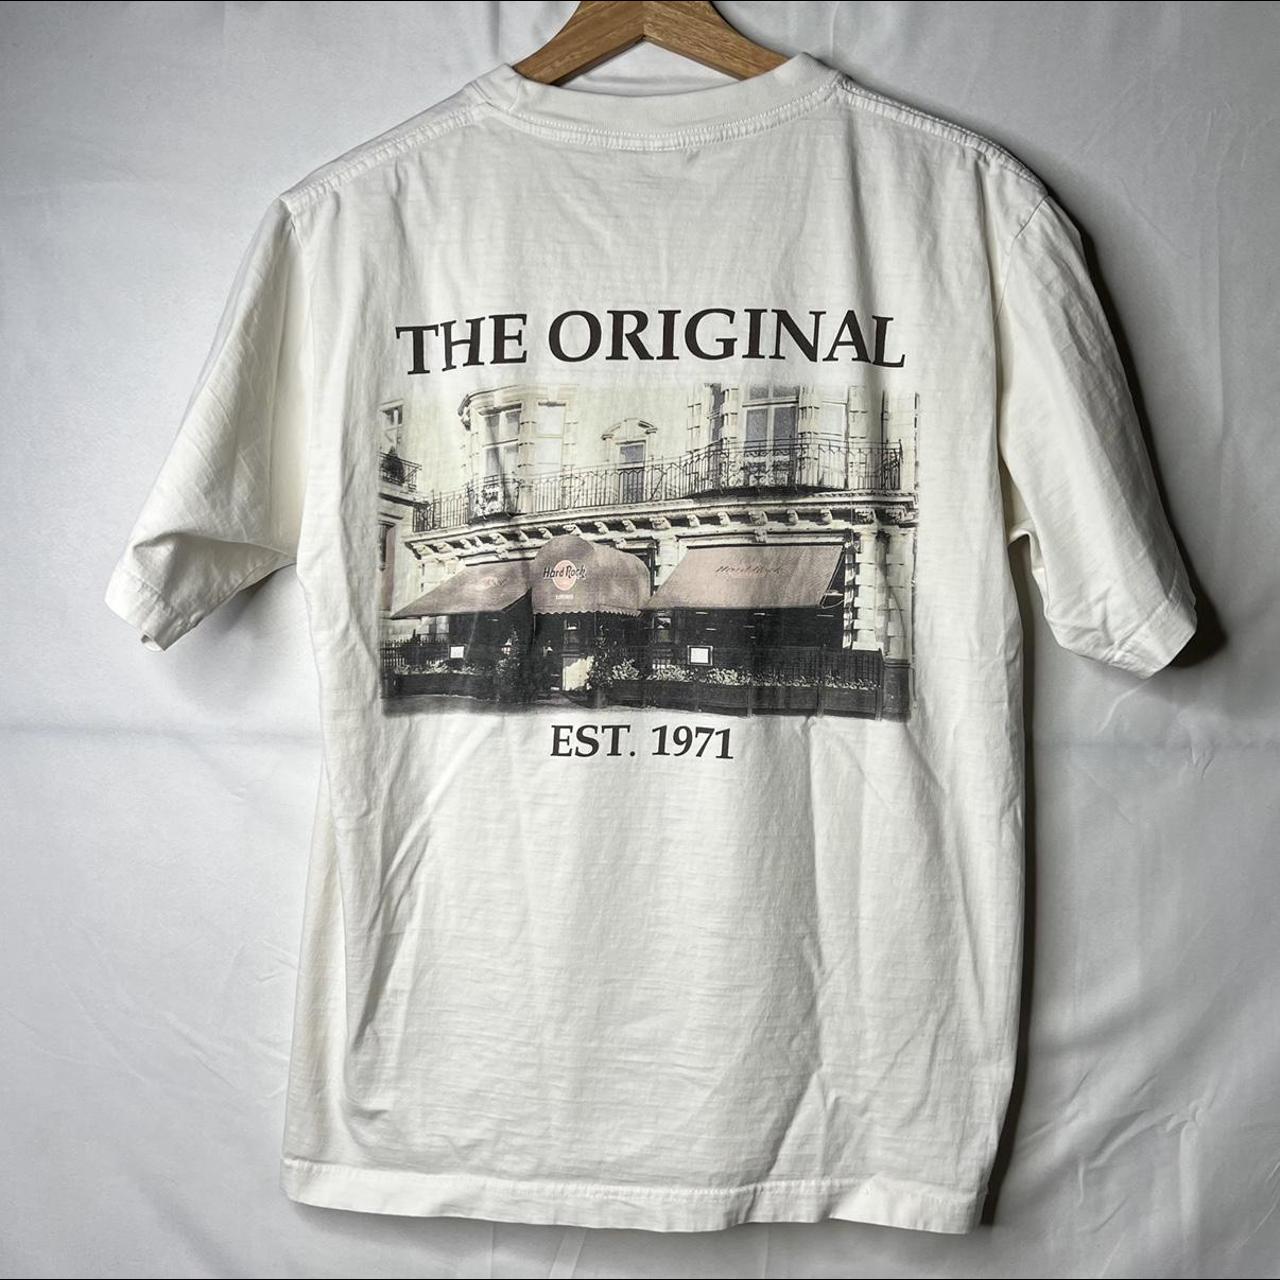 Product Image 1 - Hard Rock London T-Shirt

Size M.